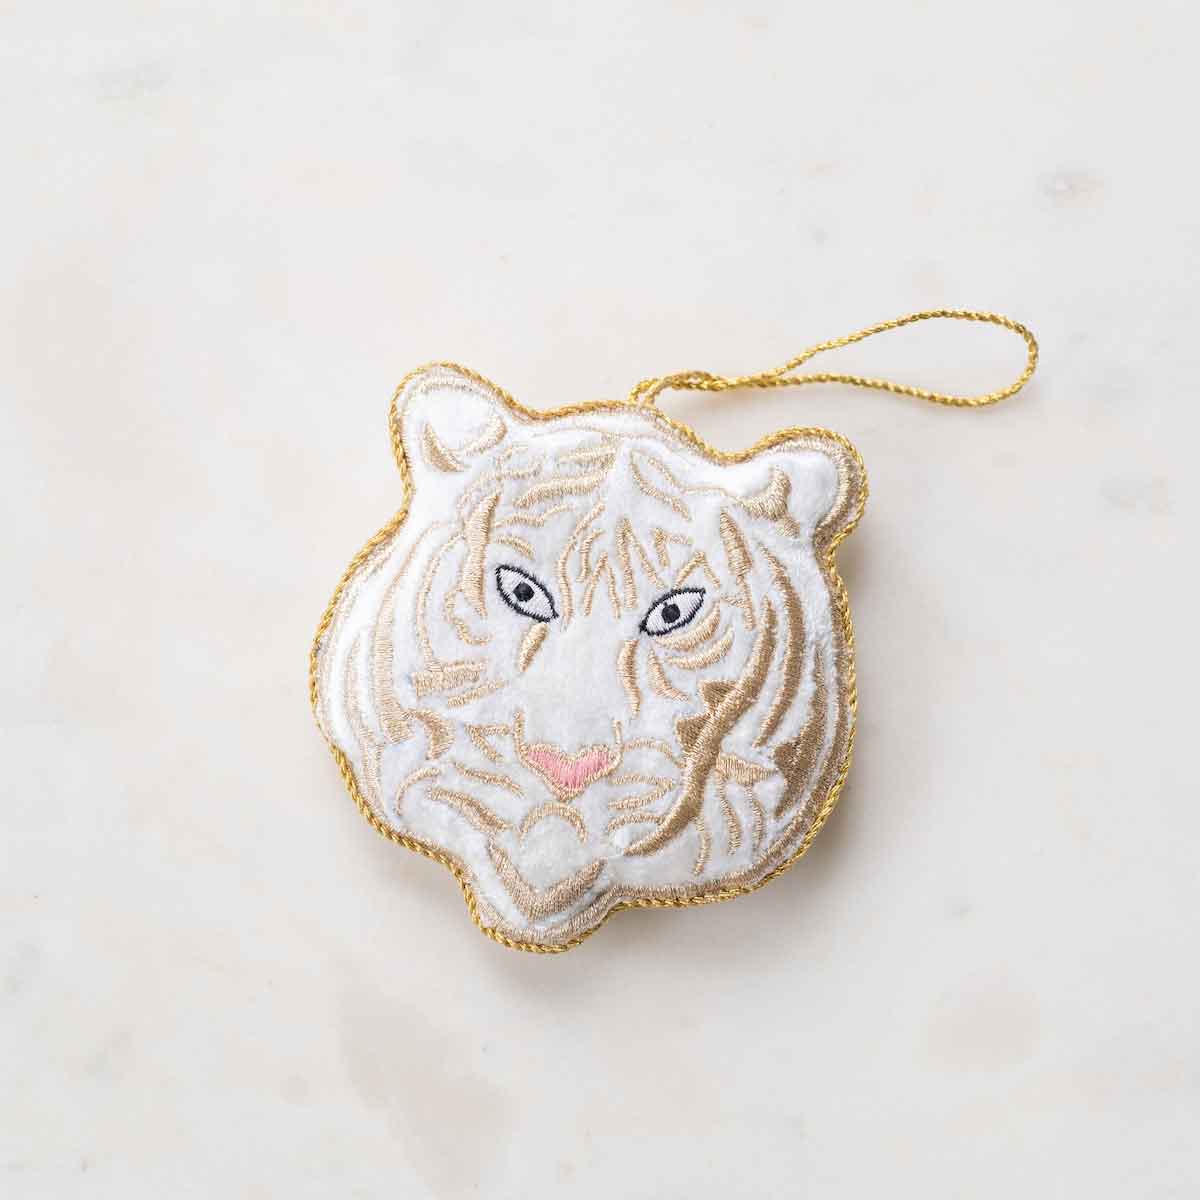 Tiger Ornament   White/Gold   3.75x4 - Pretty Crafty Lady Shop